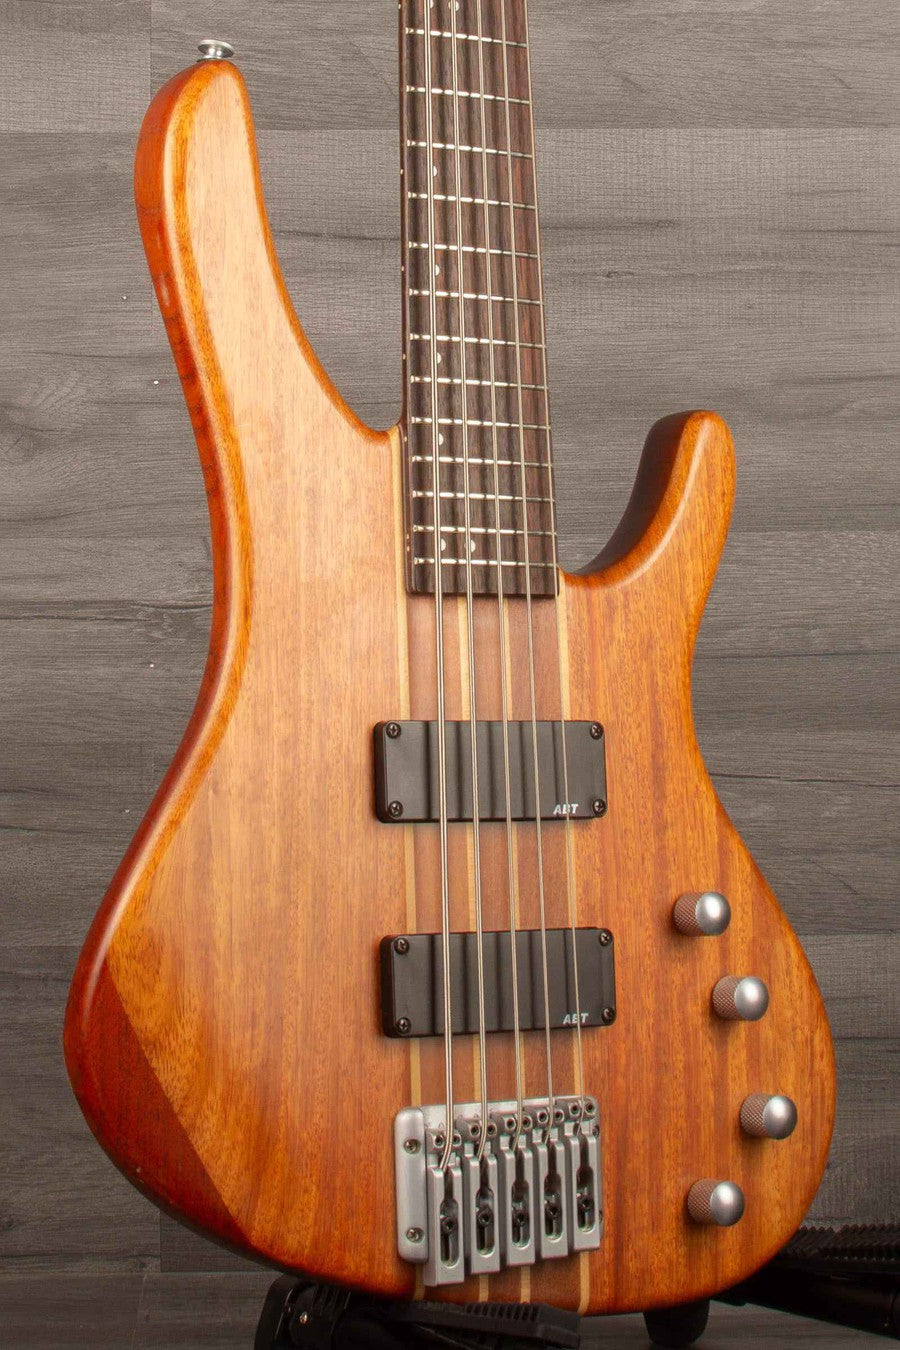 USED - Washburn Force ATB 5 String Bass